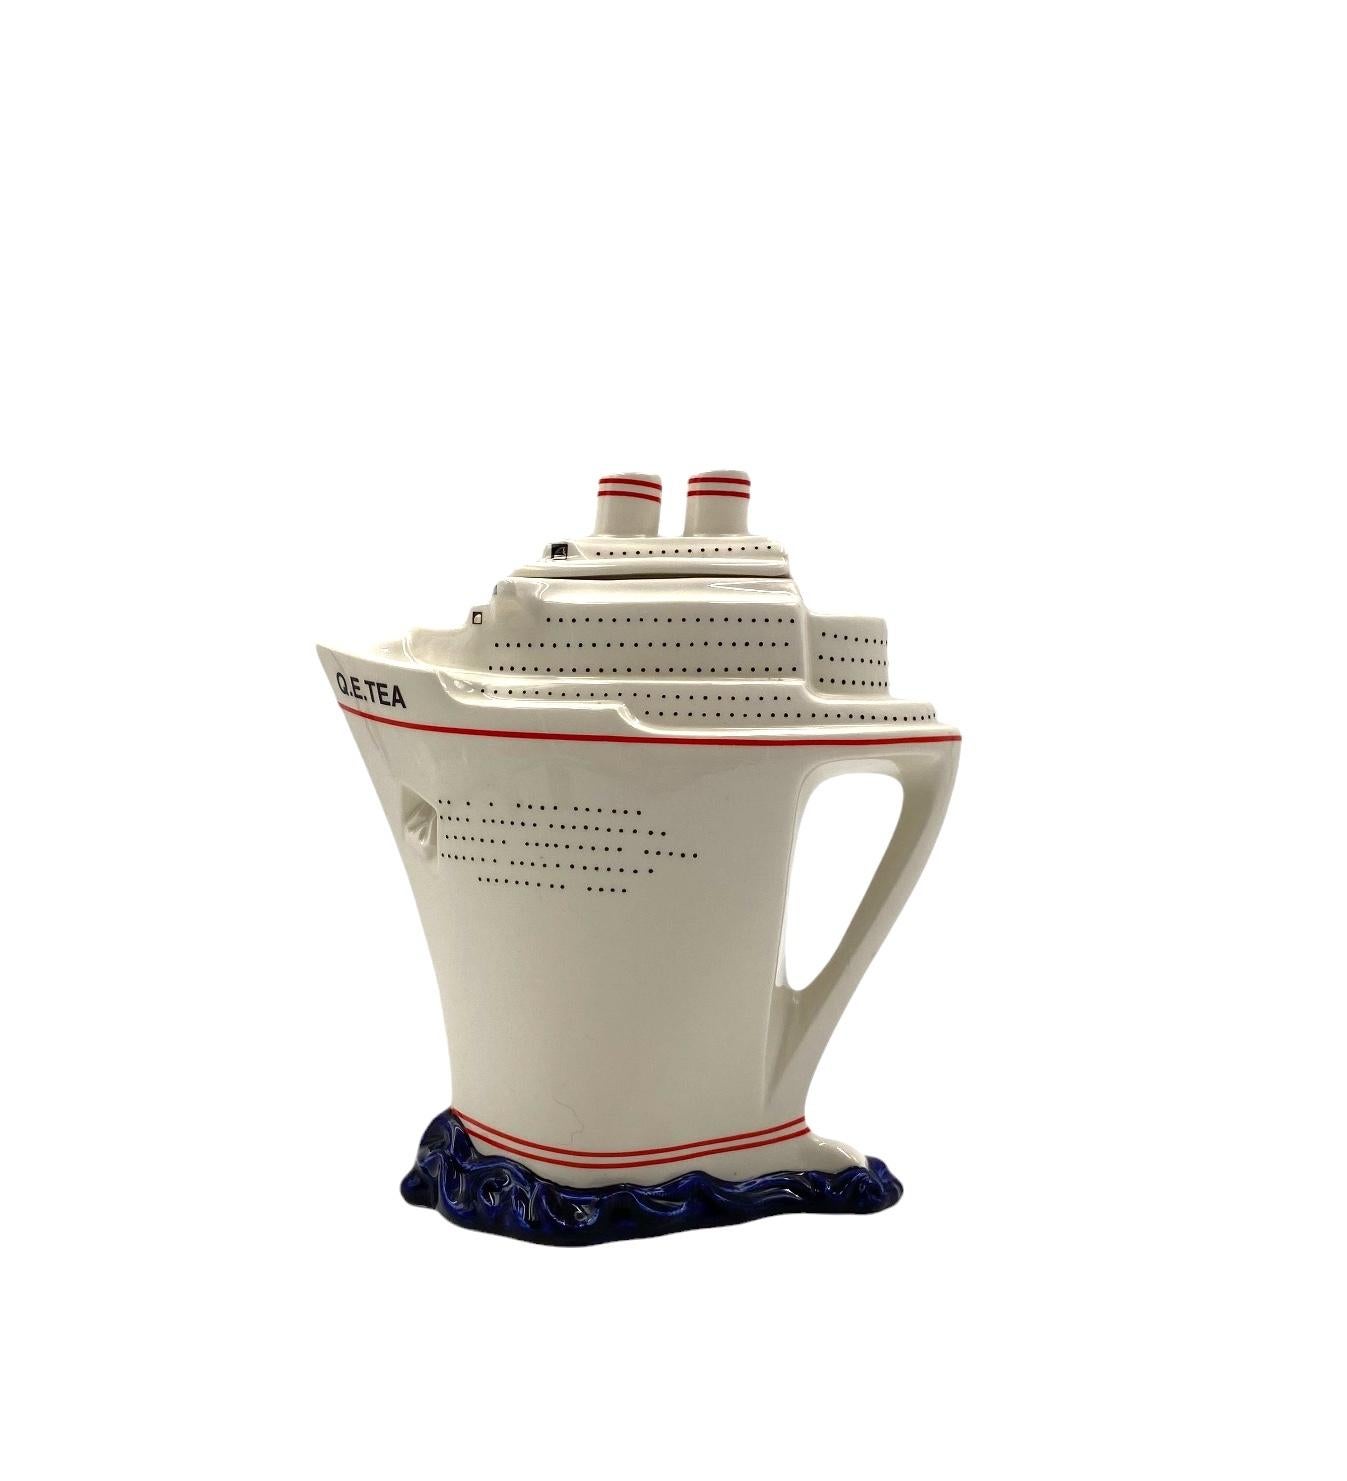 Queen Elizabeth II Cruise Ship Teapot, Paul Cardew, UK, 2000s For Sale 2